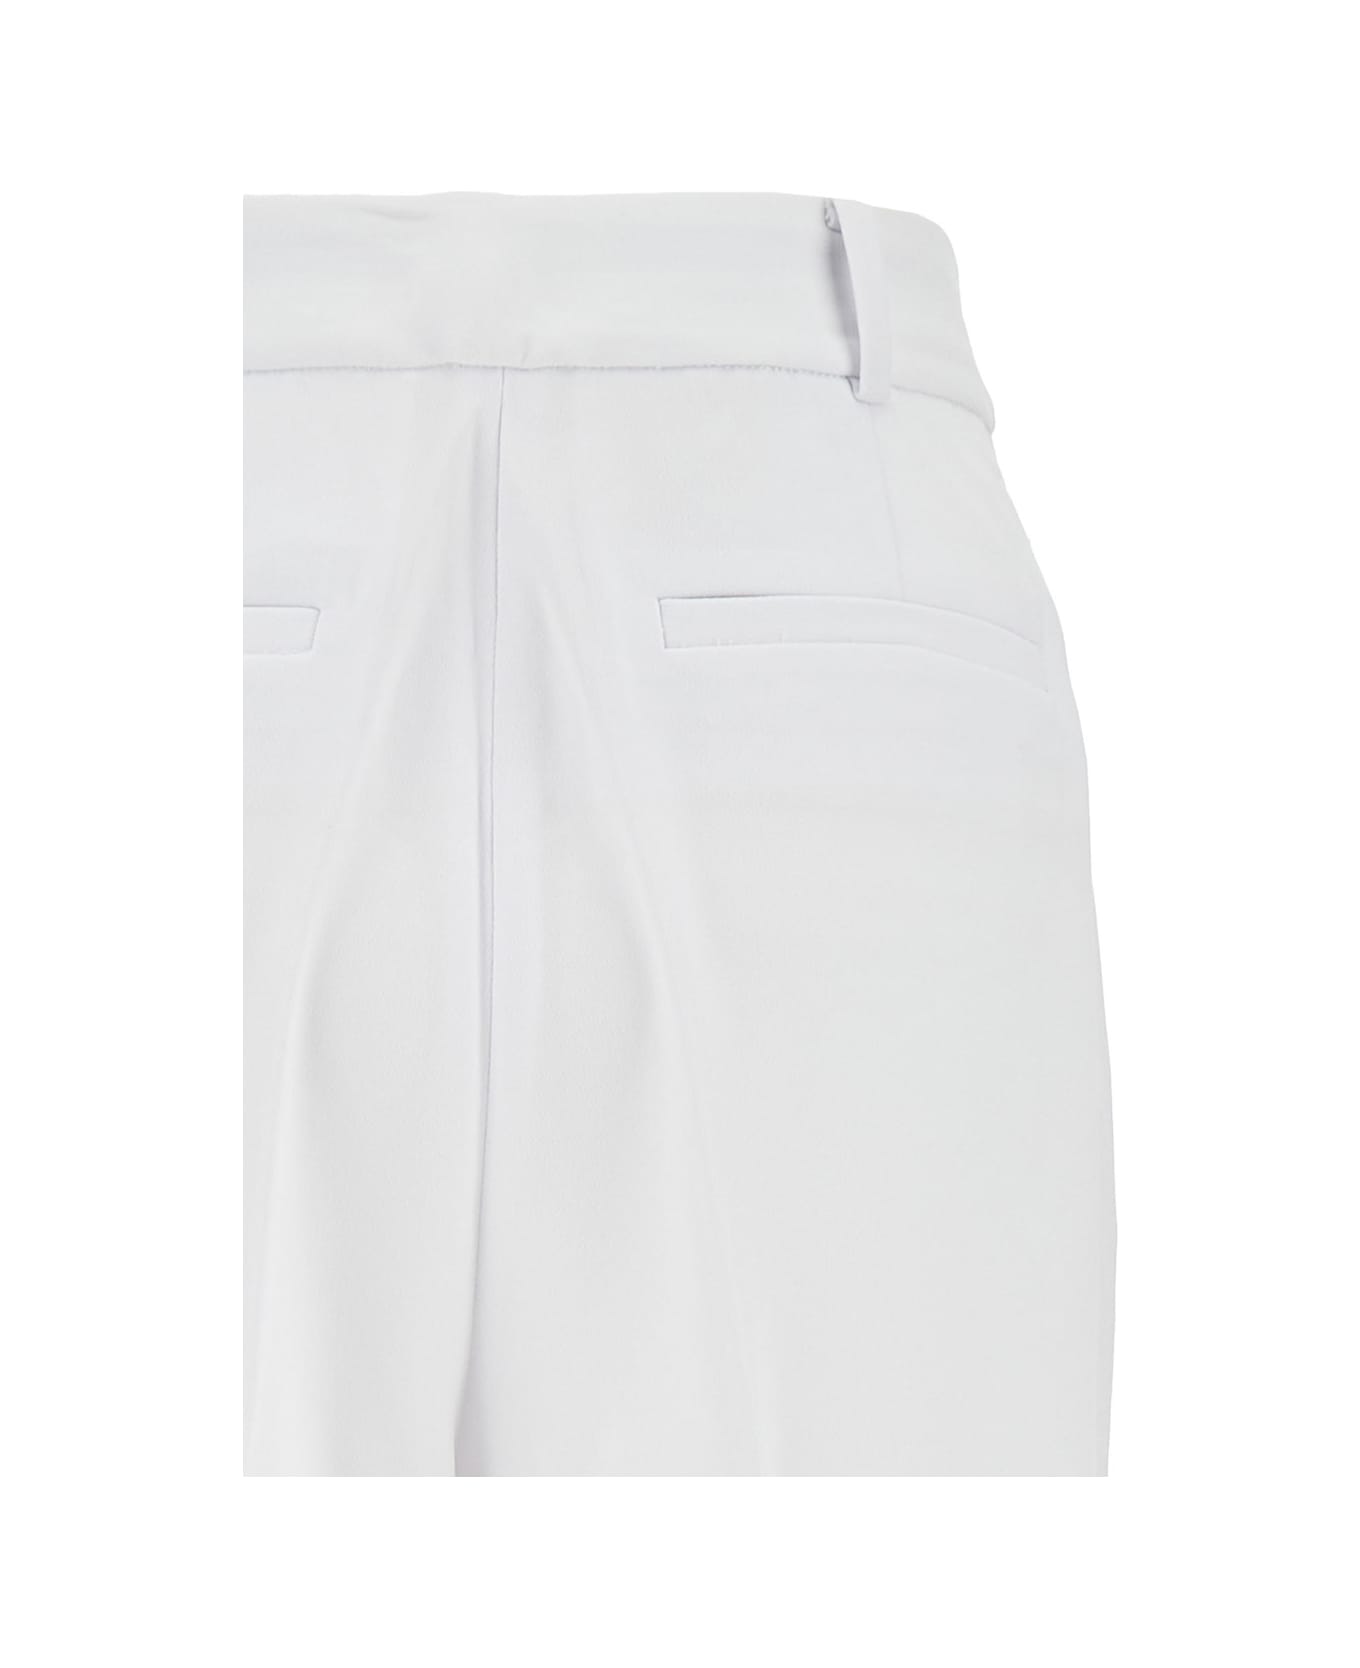 MICHAEL Michael Kors Wide Leg Tailored Pants - White